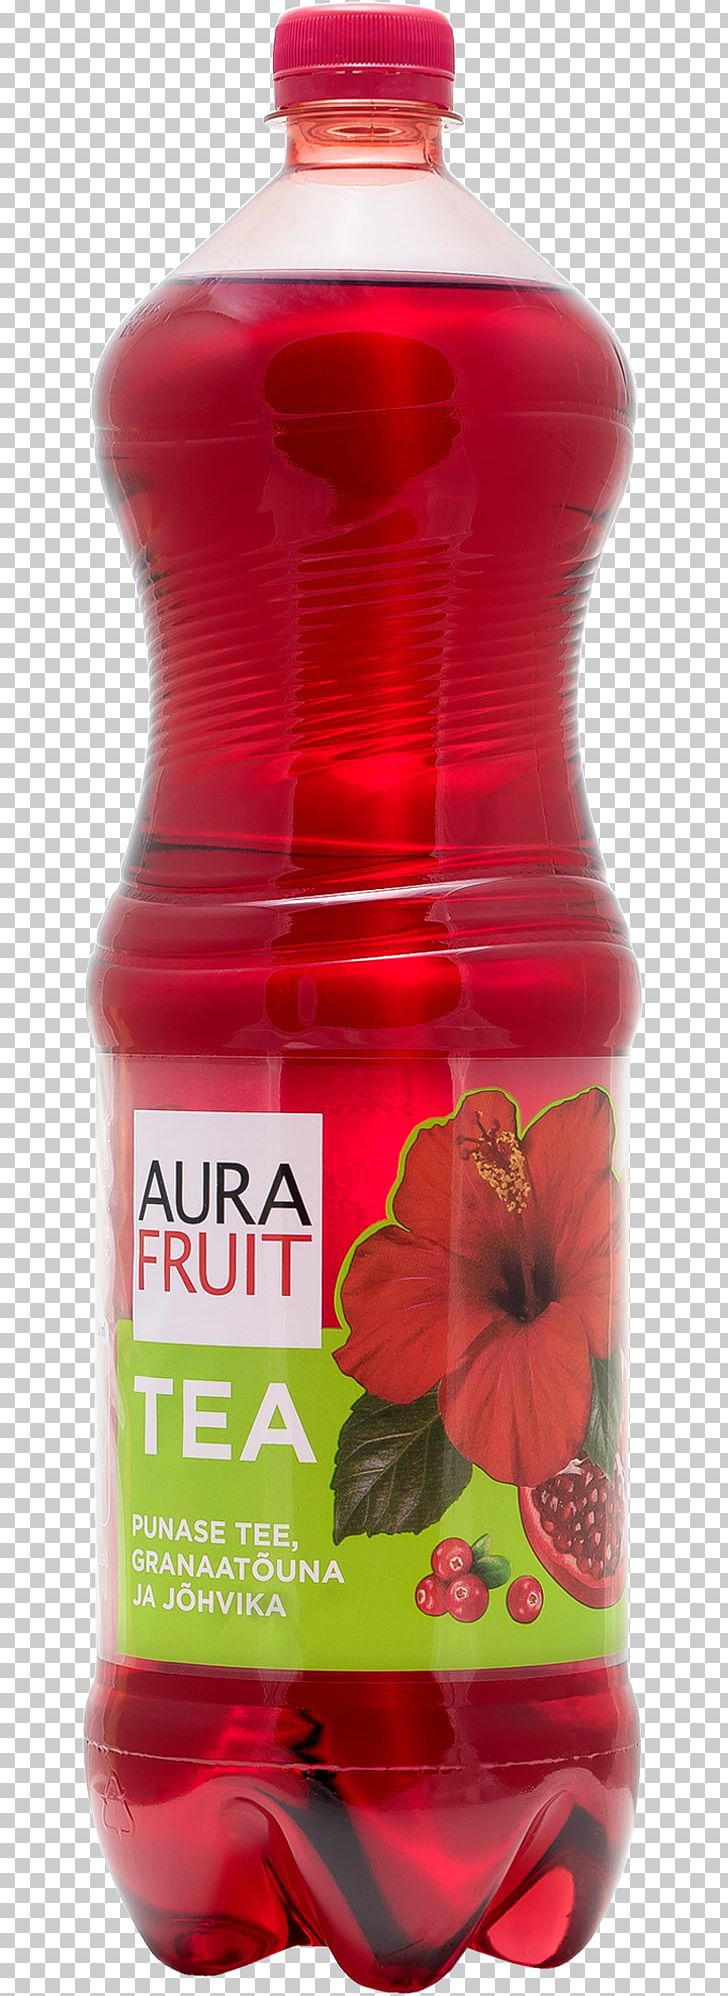 Fruit Tea Drink Cranberry Pomegranate Juice PNG, Clipart, Cranberries, Cranberry, Drink, Flavor, Food Drinks Free PNG Download